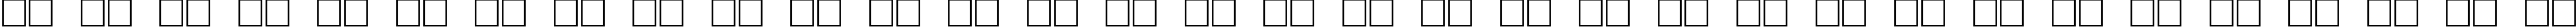 Пример написания русского алфавита шрифтом Tiff-Heavy